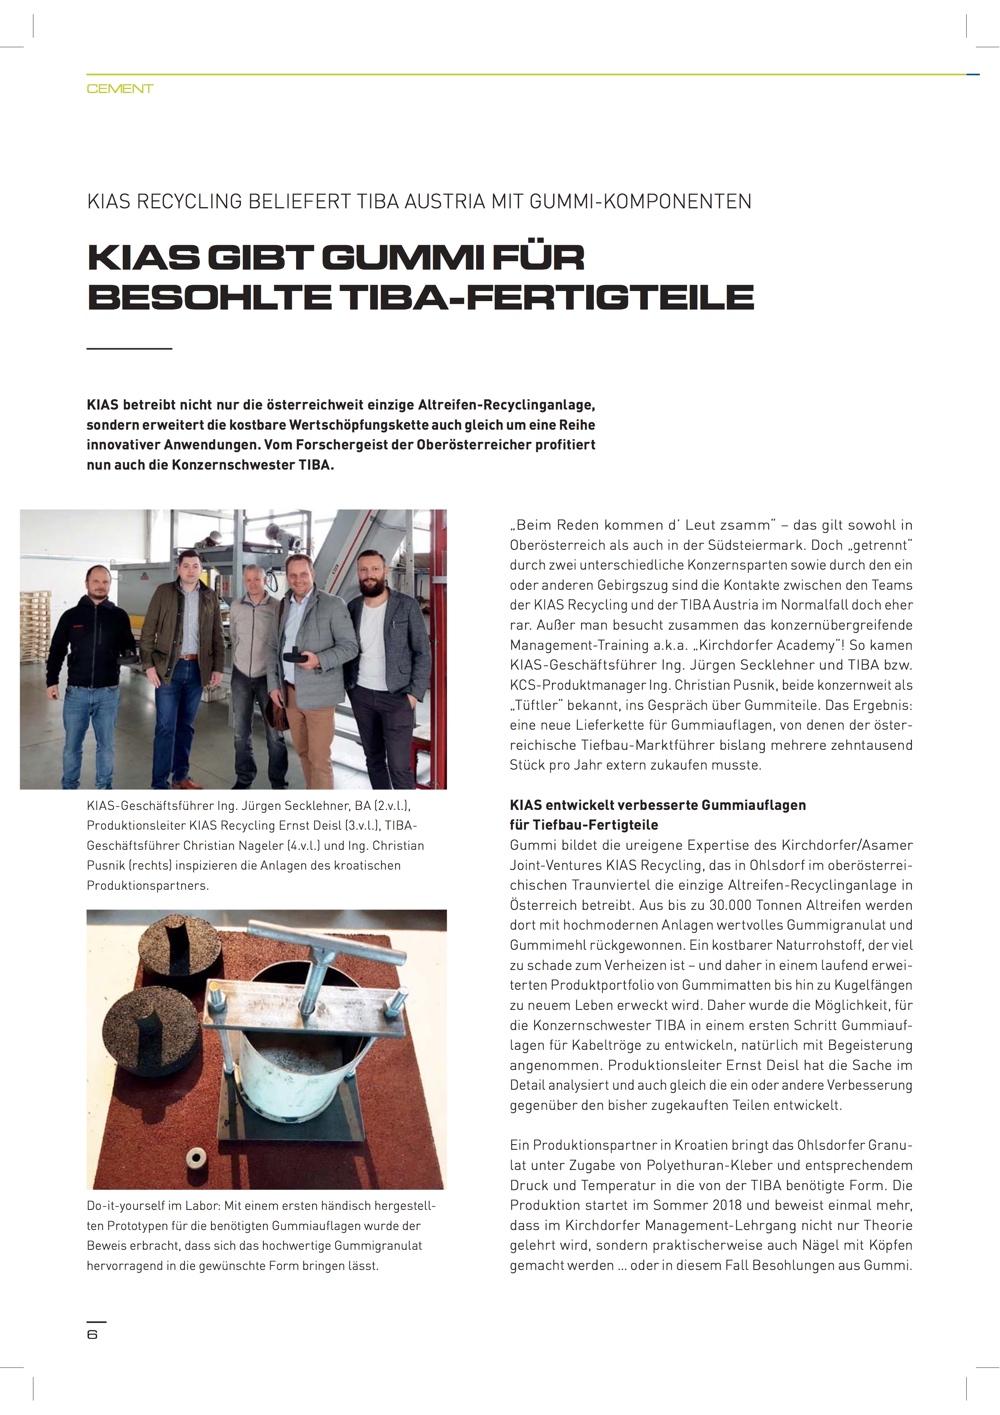 KIAS gibt Gummi für besohlte TIBA-Fertigteile - KIAS Recycling GmbH